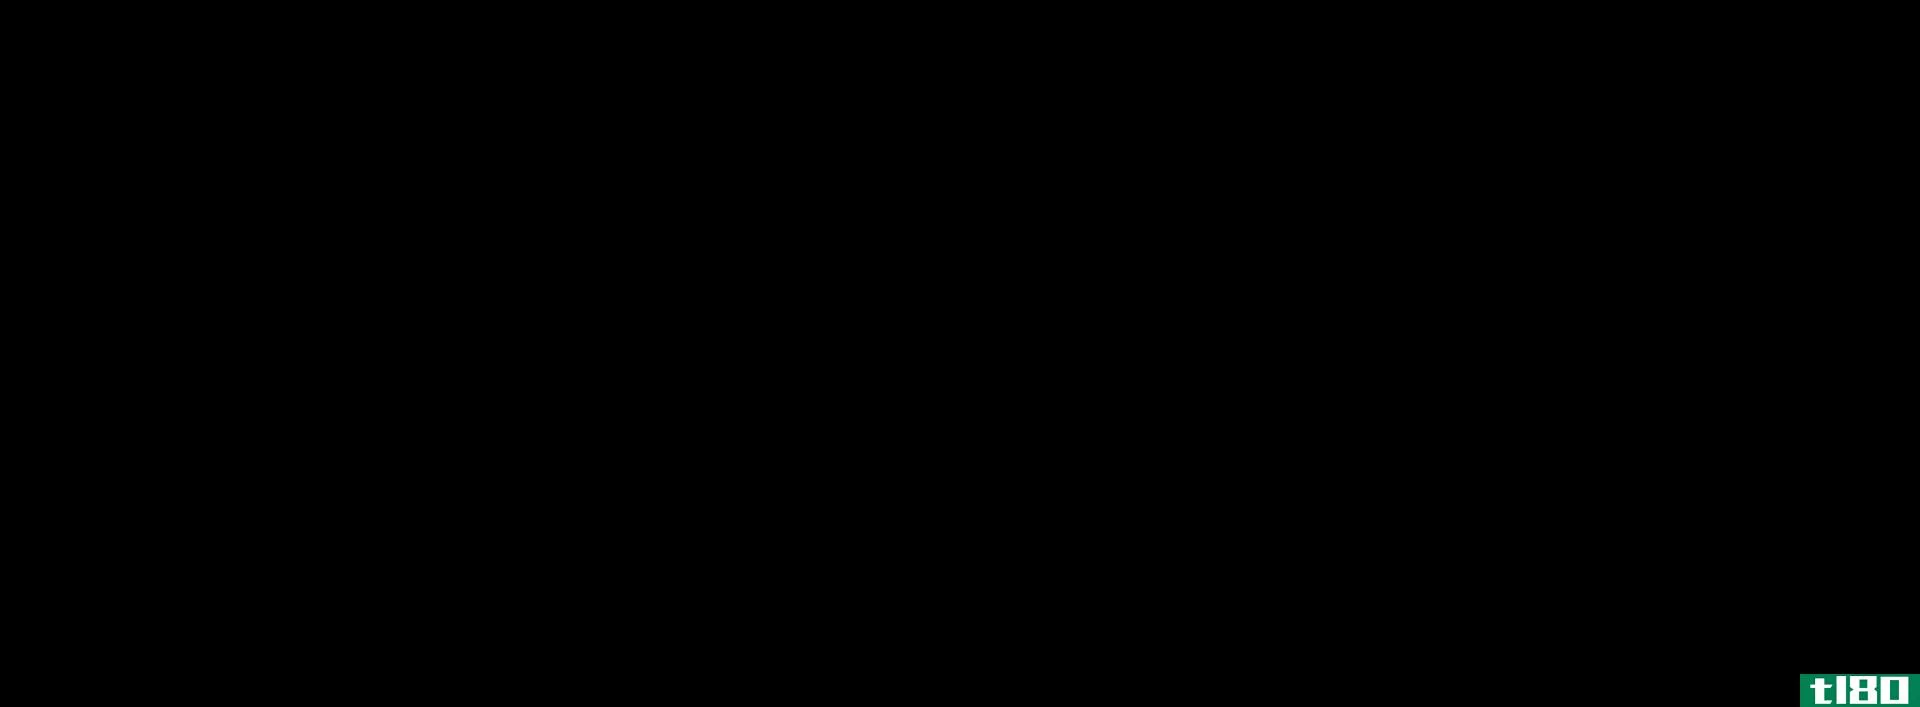 羟醛缩合(aldol condensation)和cannizzaro反应(cannizzaro reaction)的区别